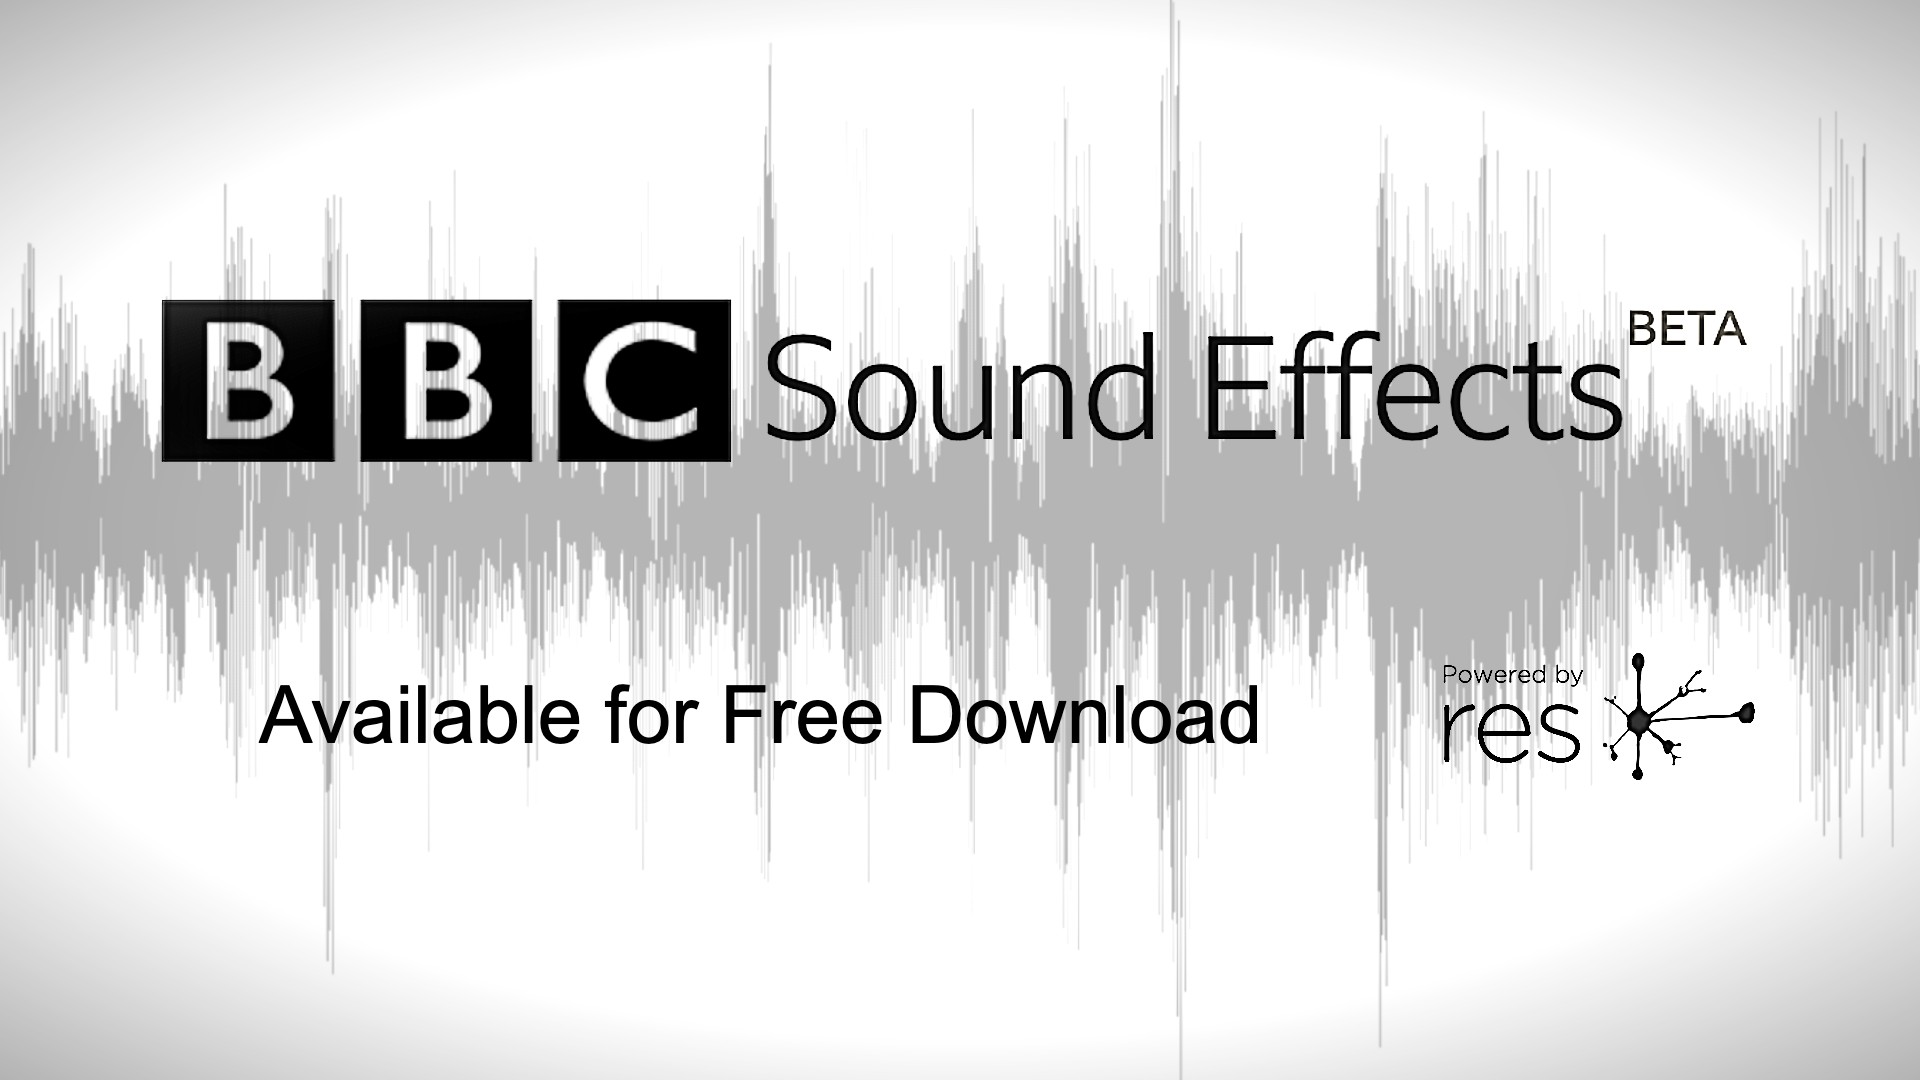 Bbc sound effects library amazon apple macbook pro 2017